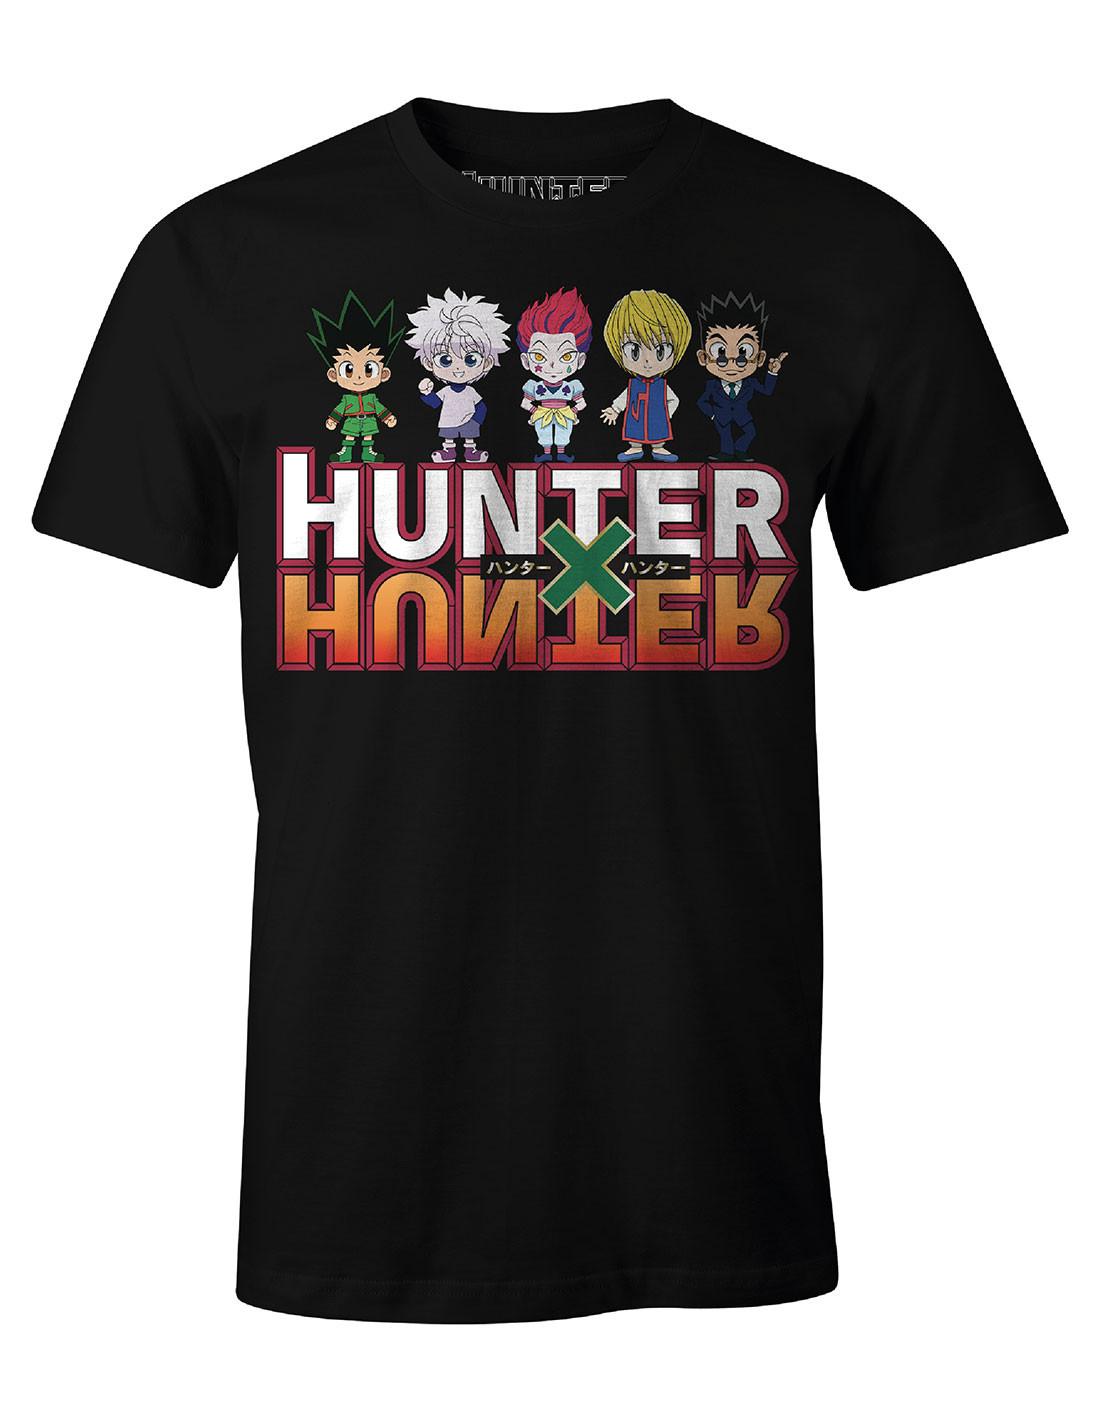 T shirt hunter x hunter hunter team